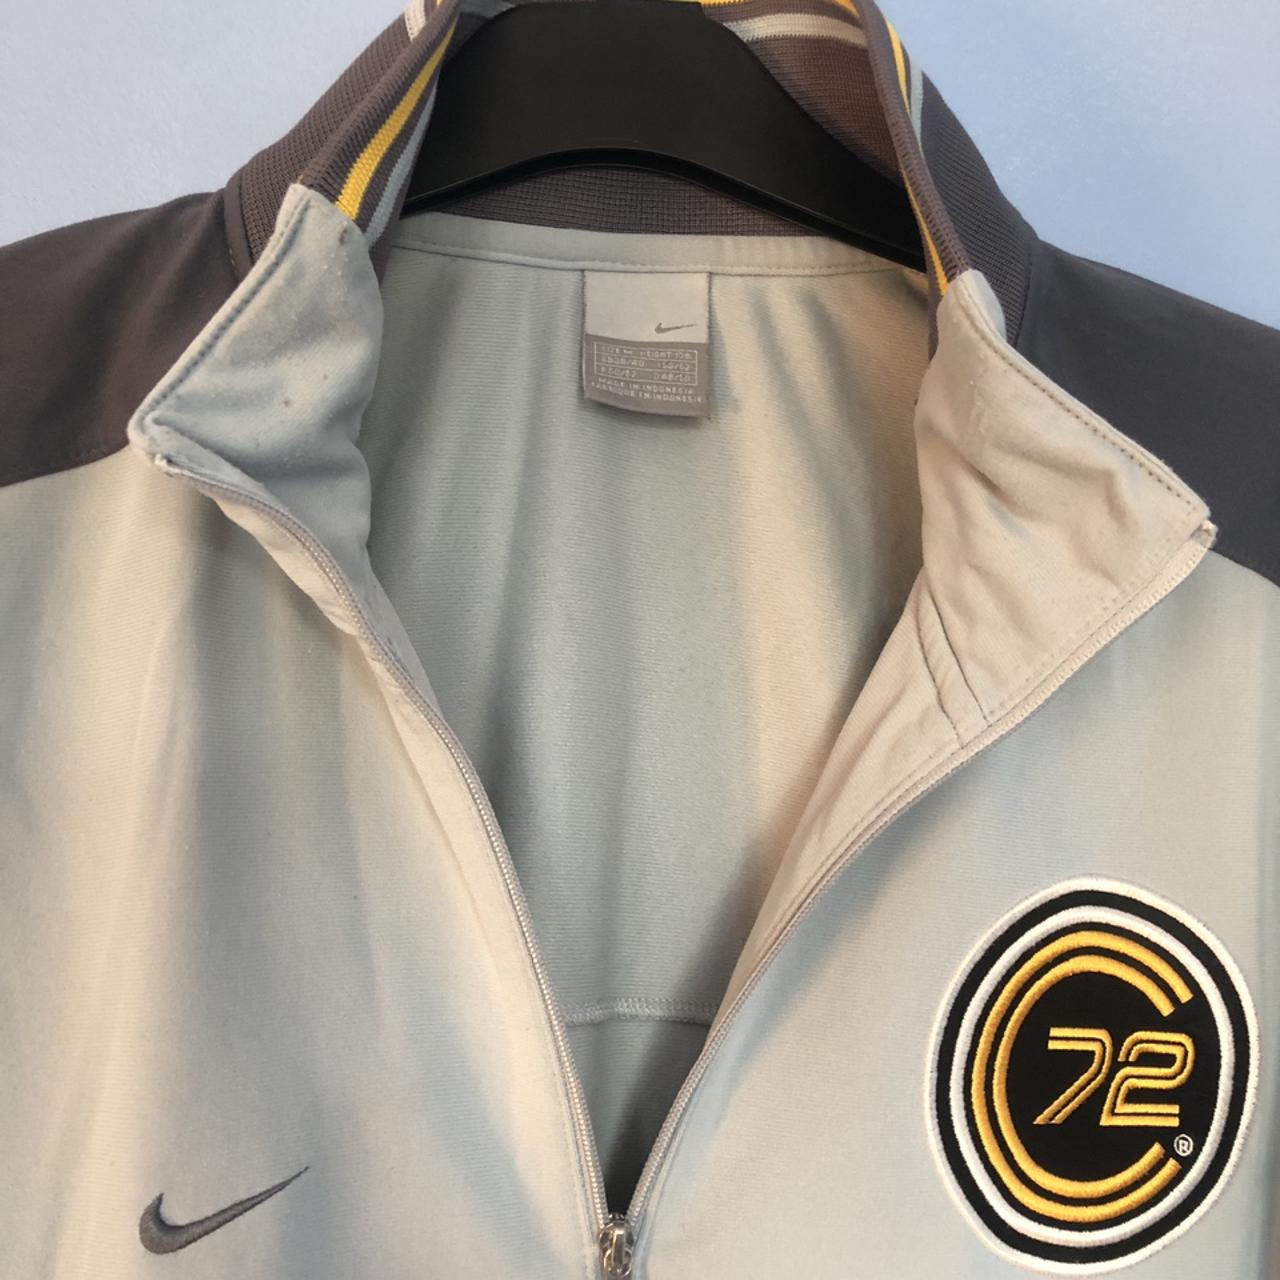 Nike COR72Z Vintage Retro Jacket All jackets are... - Depop